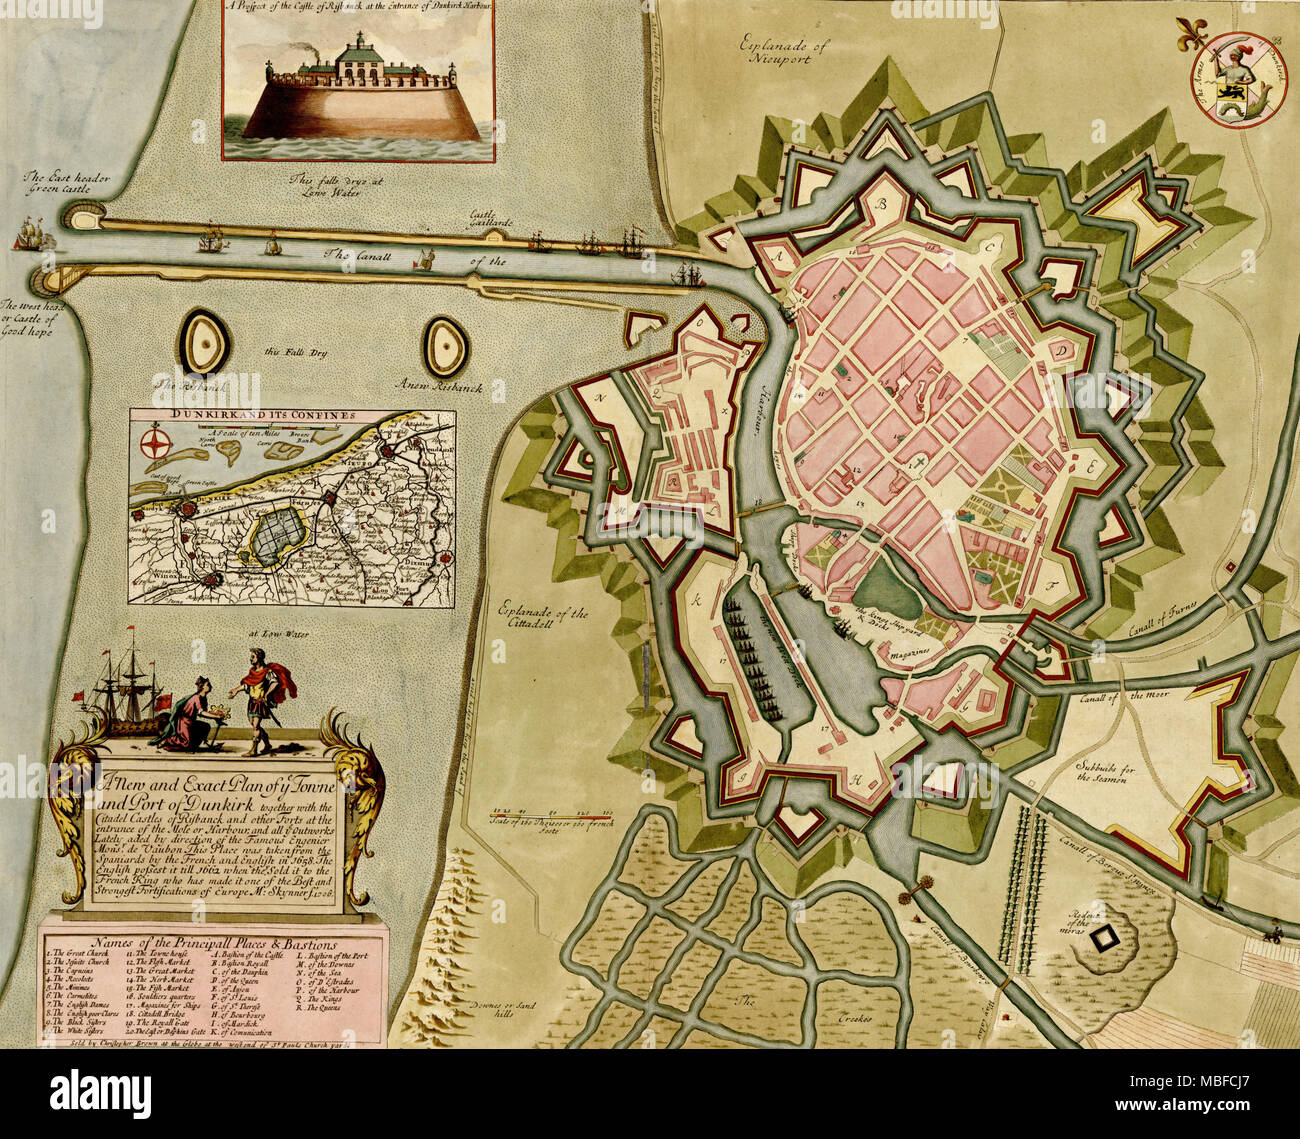 Survey of London, Westminster, et Southwark - 1700 Banque D'Images